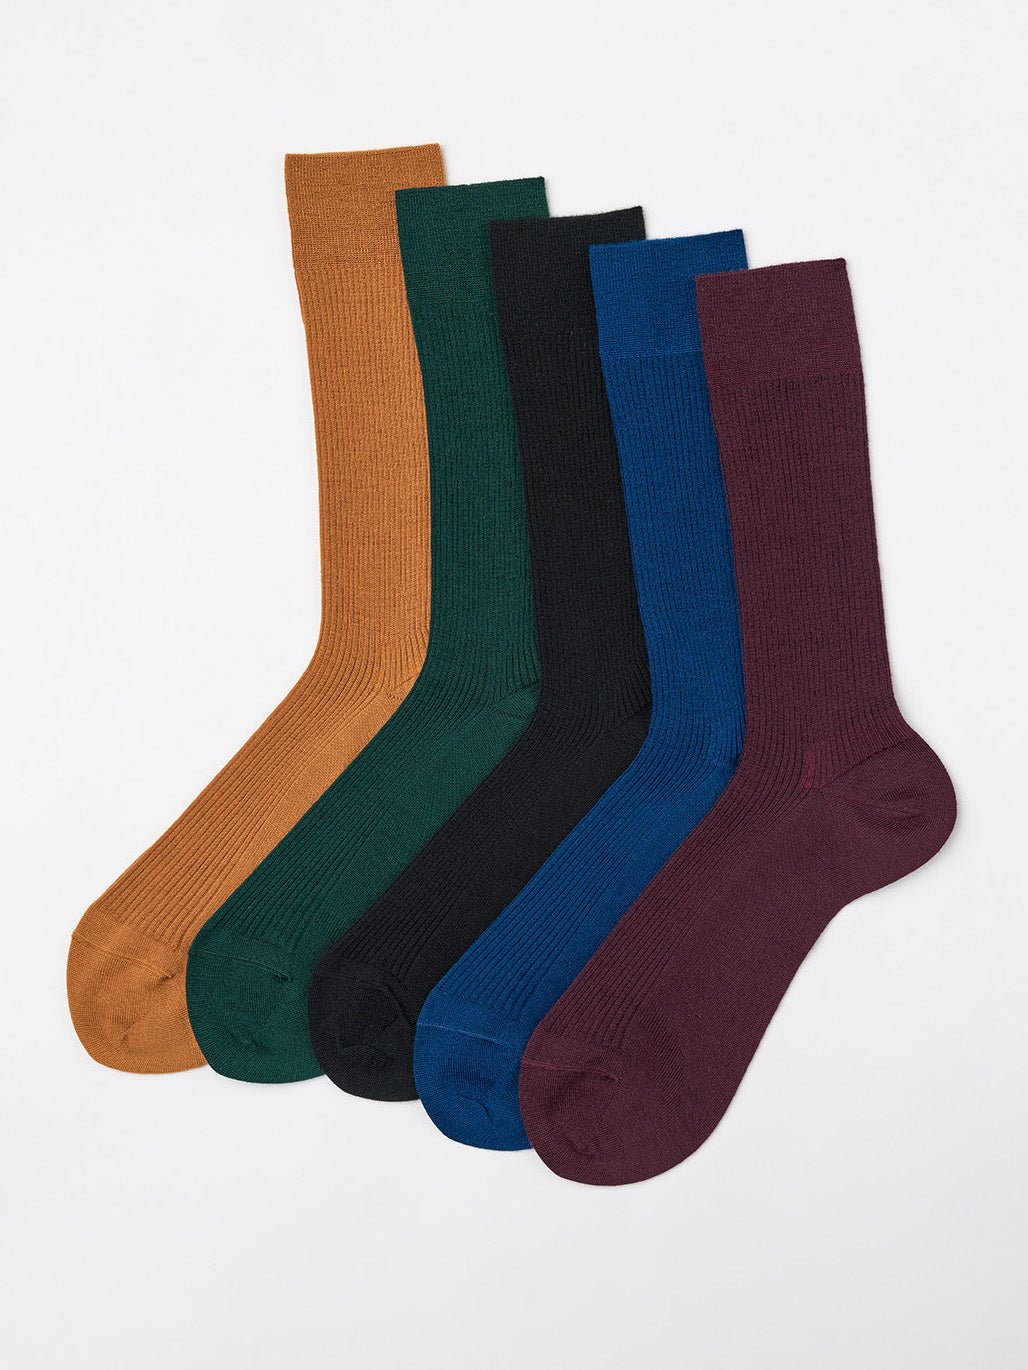 Classy Socks Merino Wool Moss